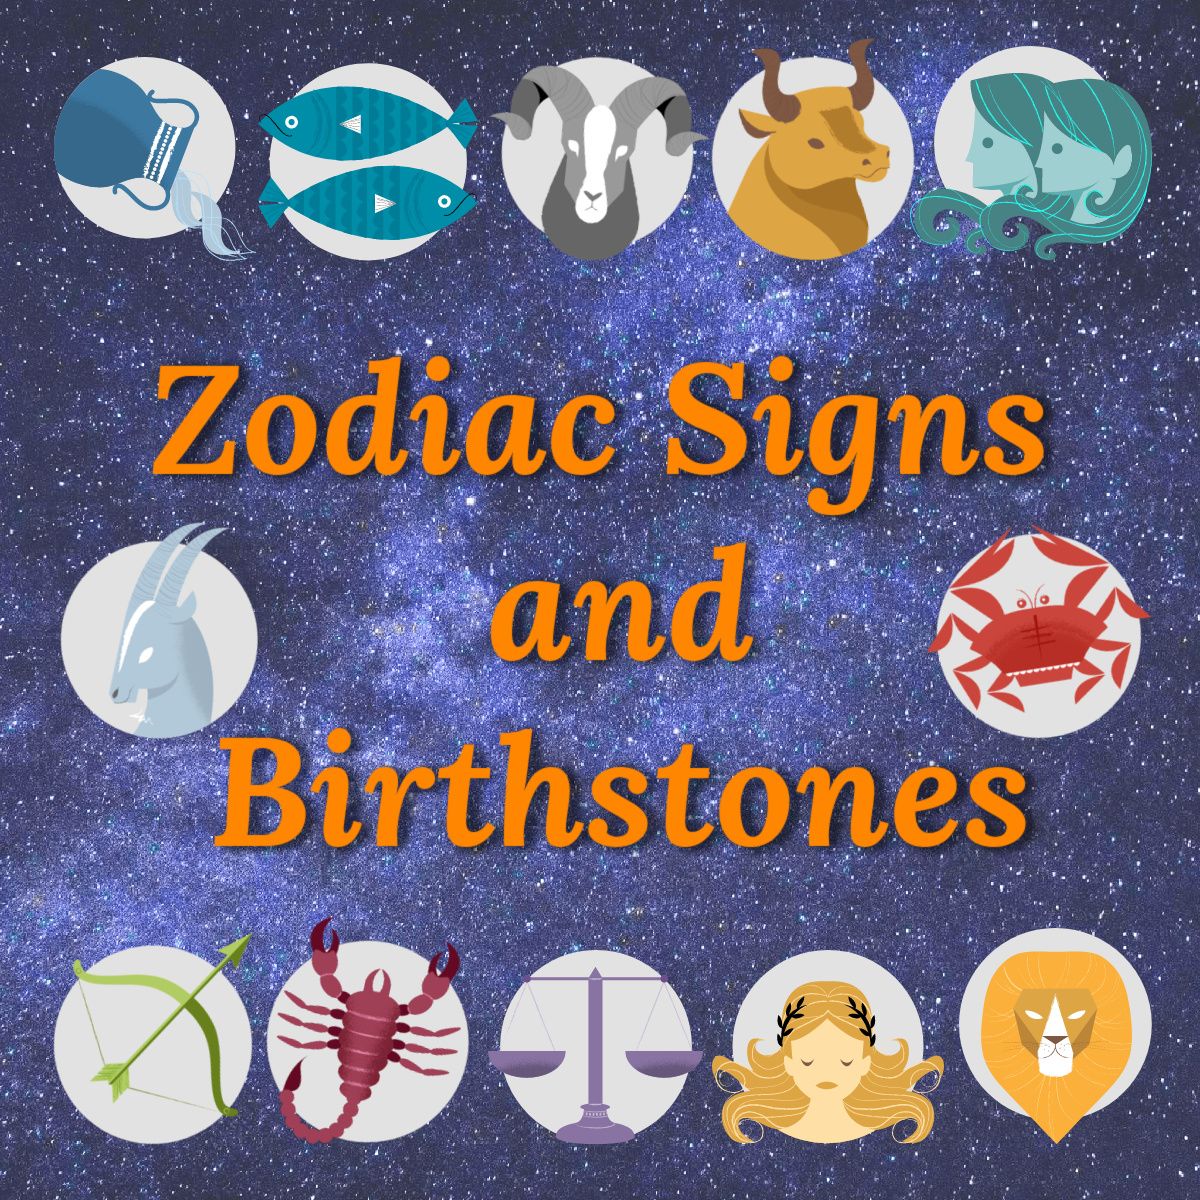 Zodiac Signs and Birtstones